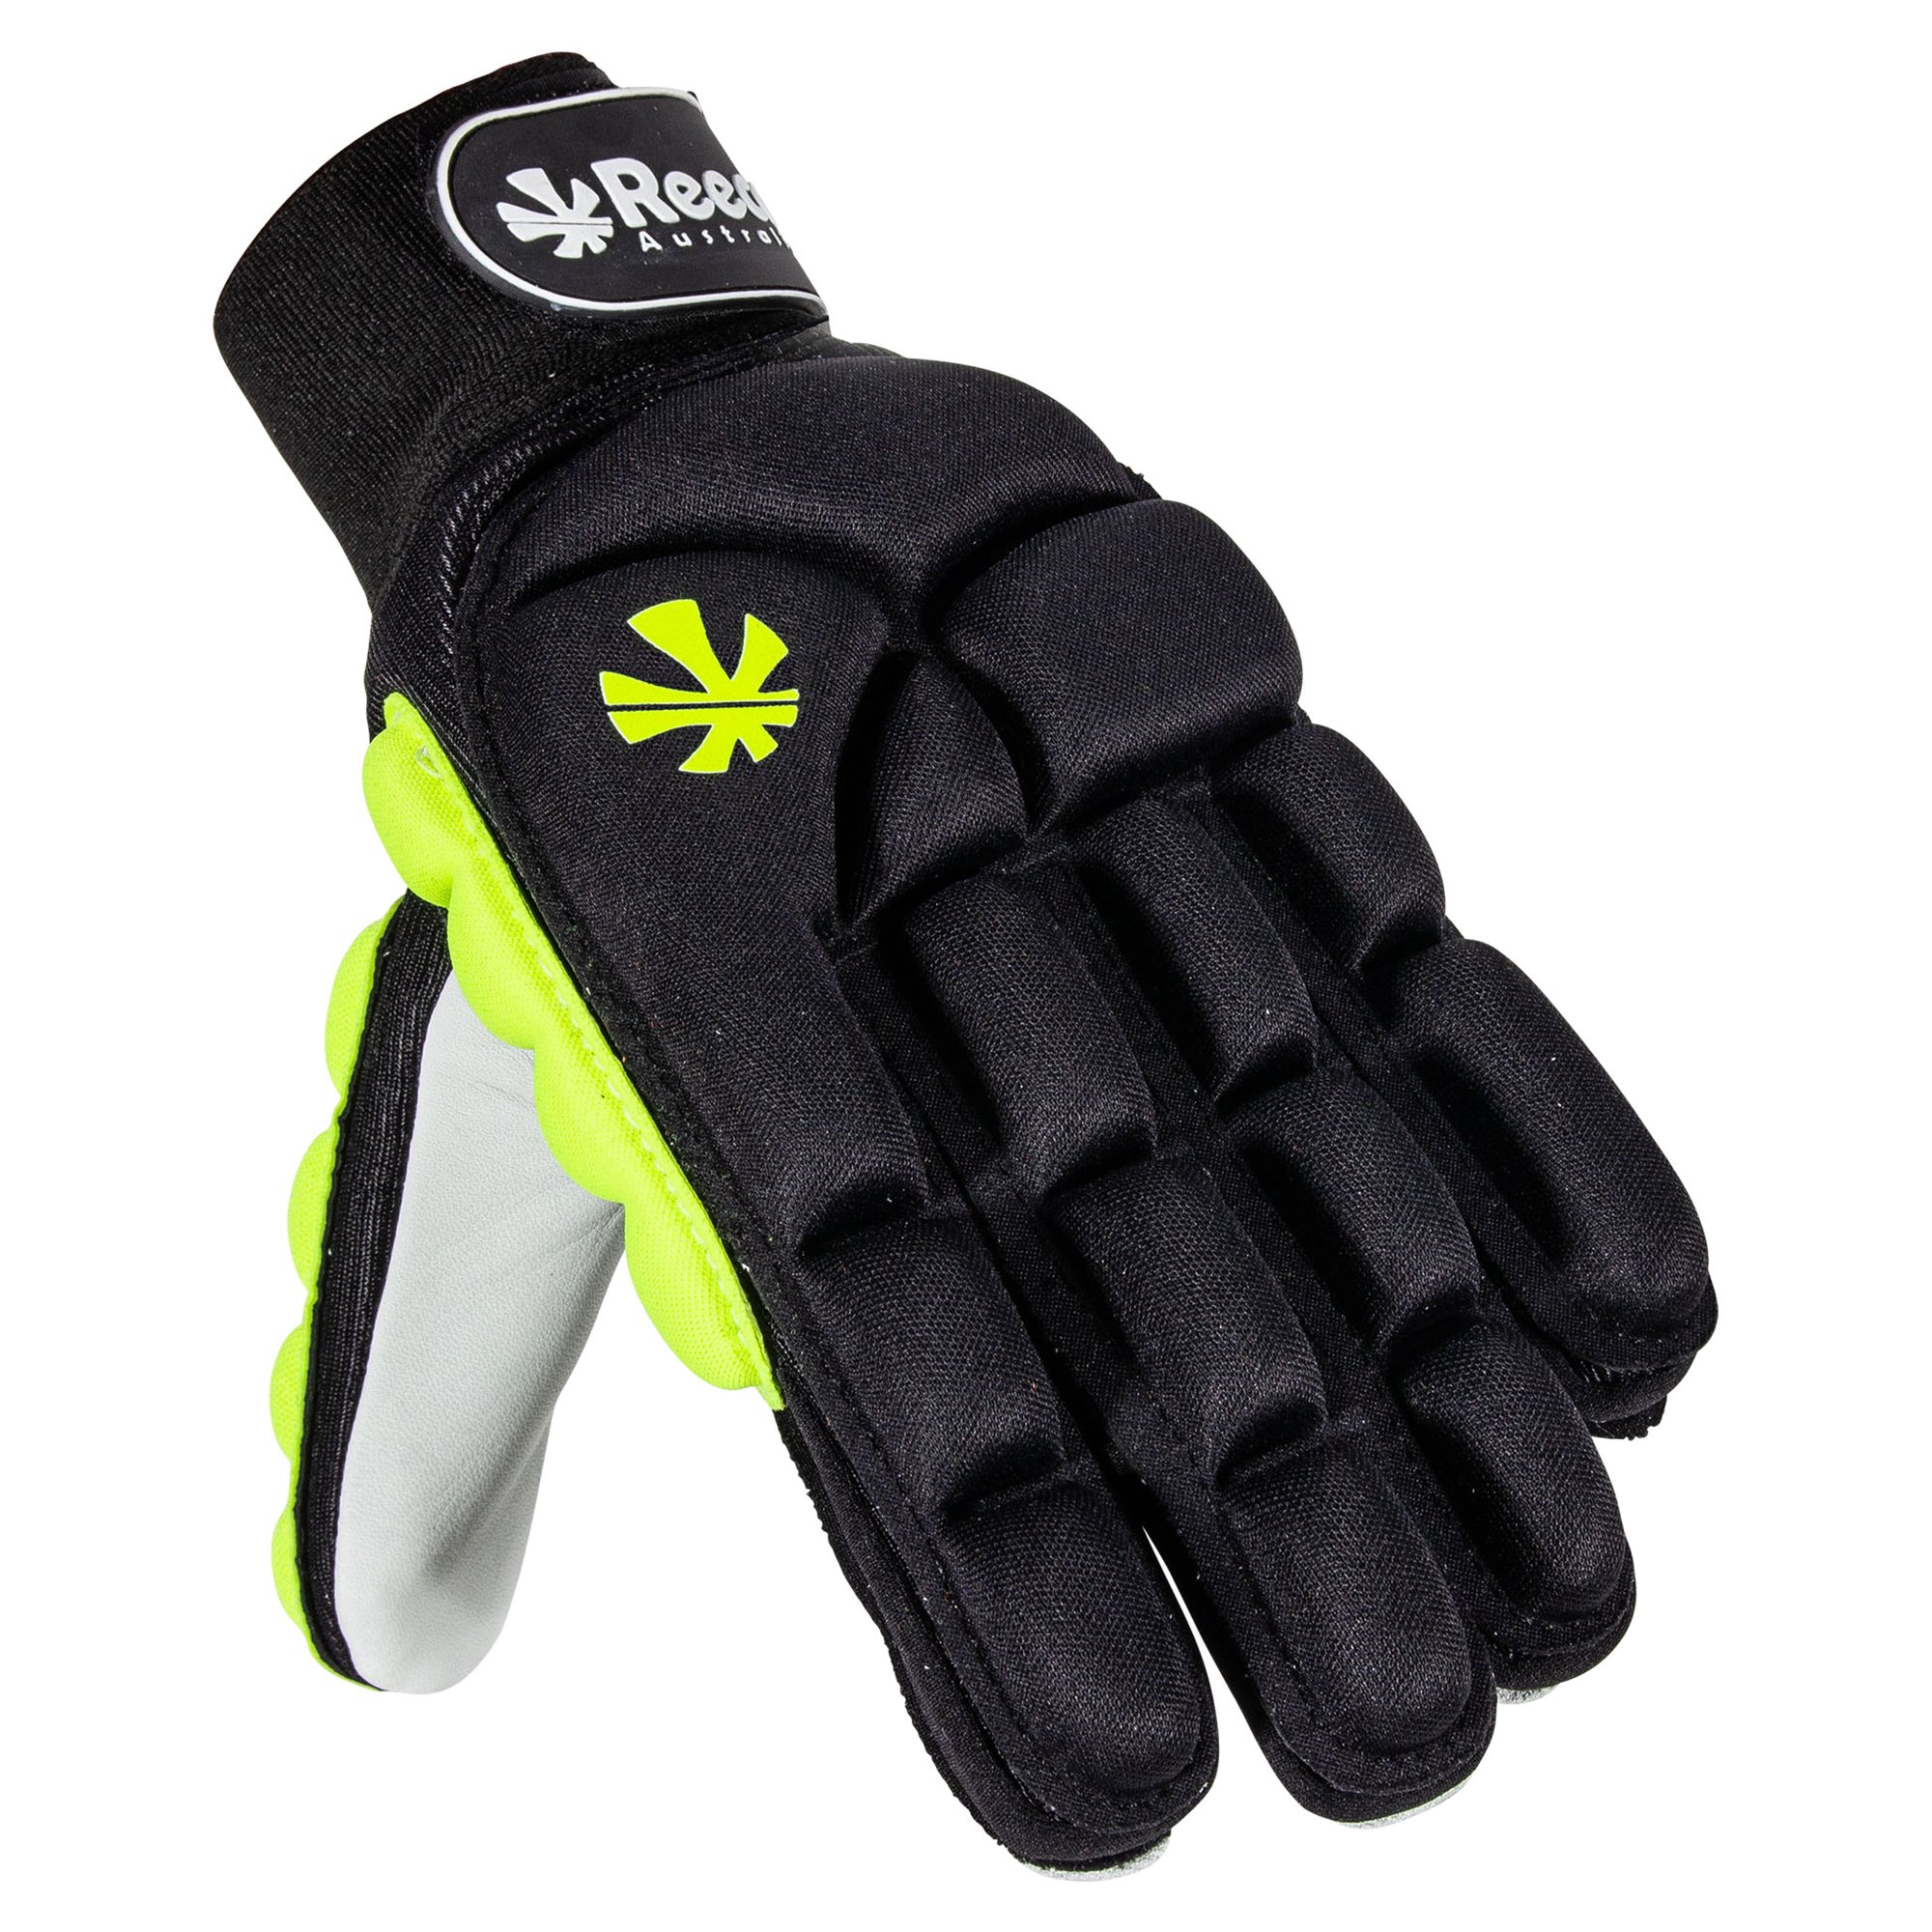 Reece Australia Force Protection Glove Slim Fit